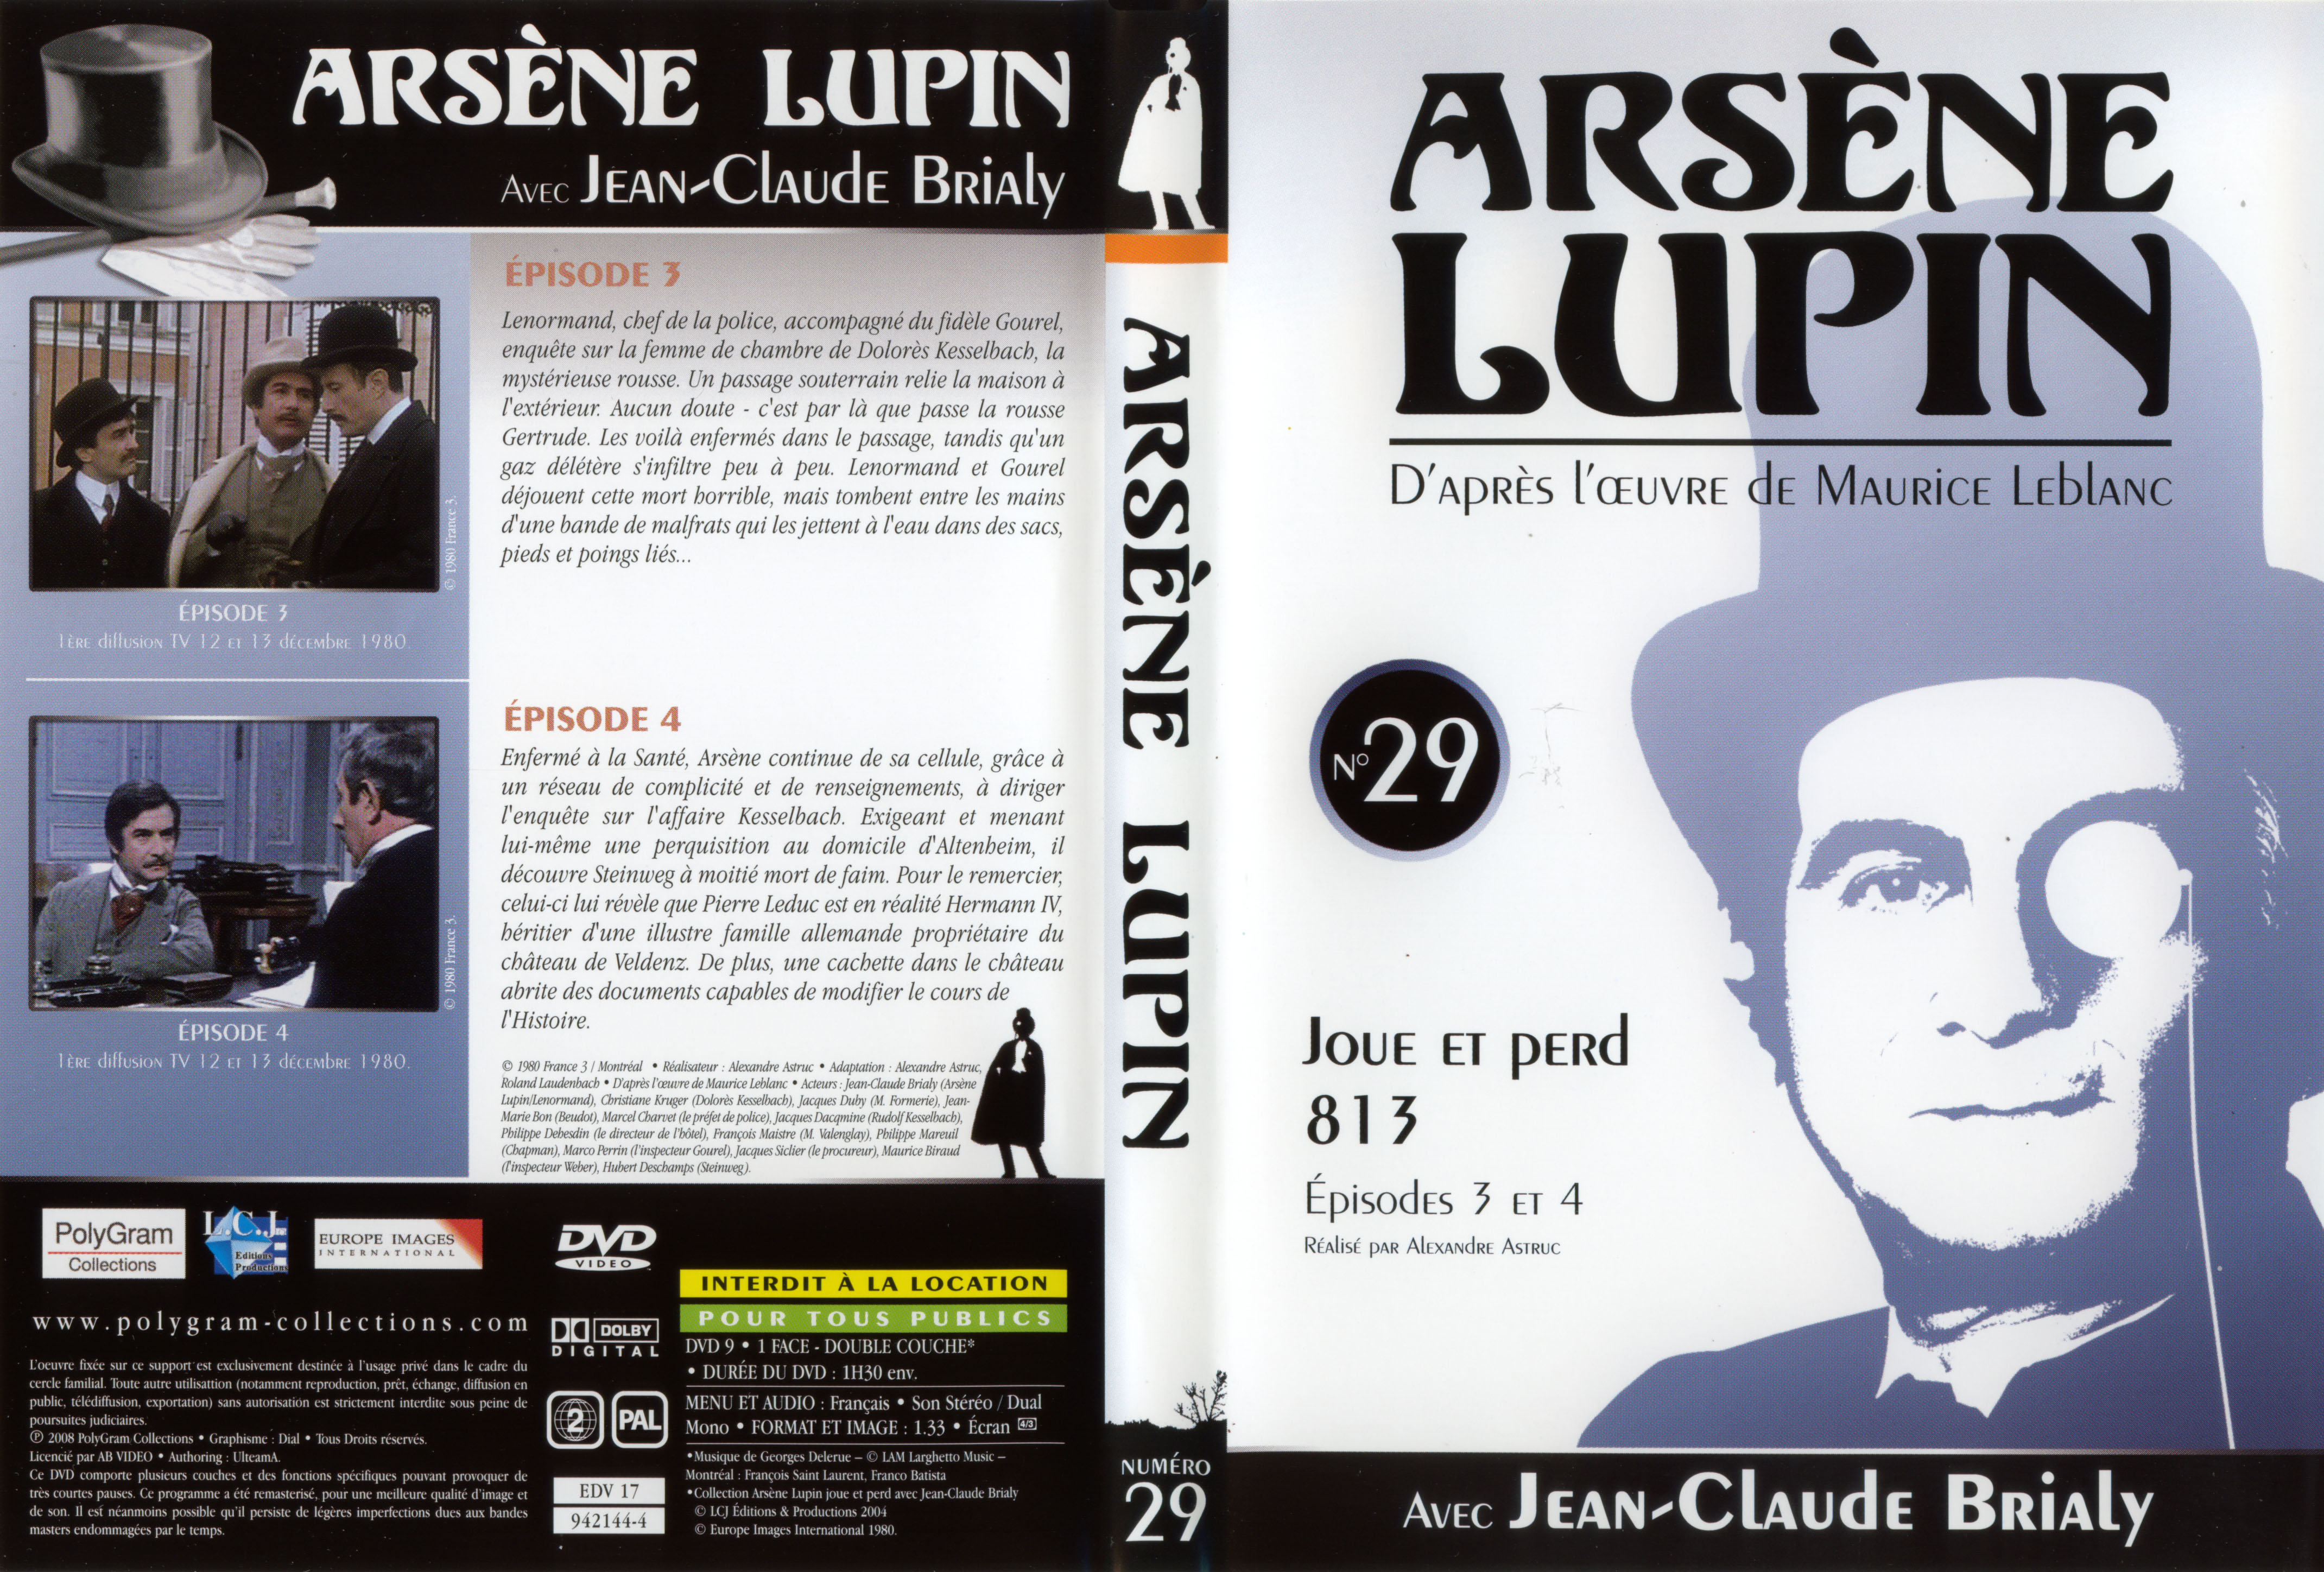 Jaquette DVD Arsene Lupin DVD 29